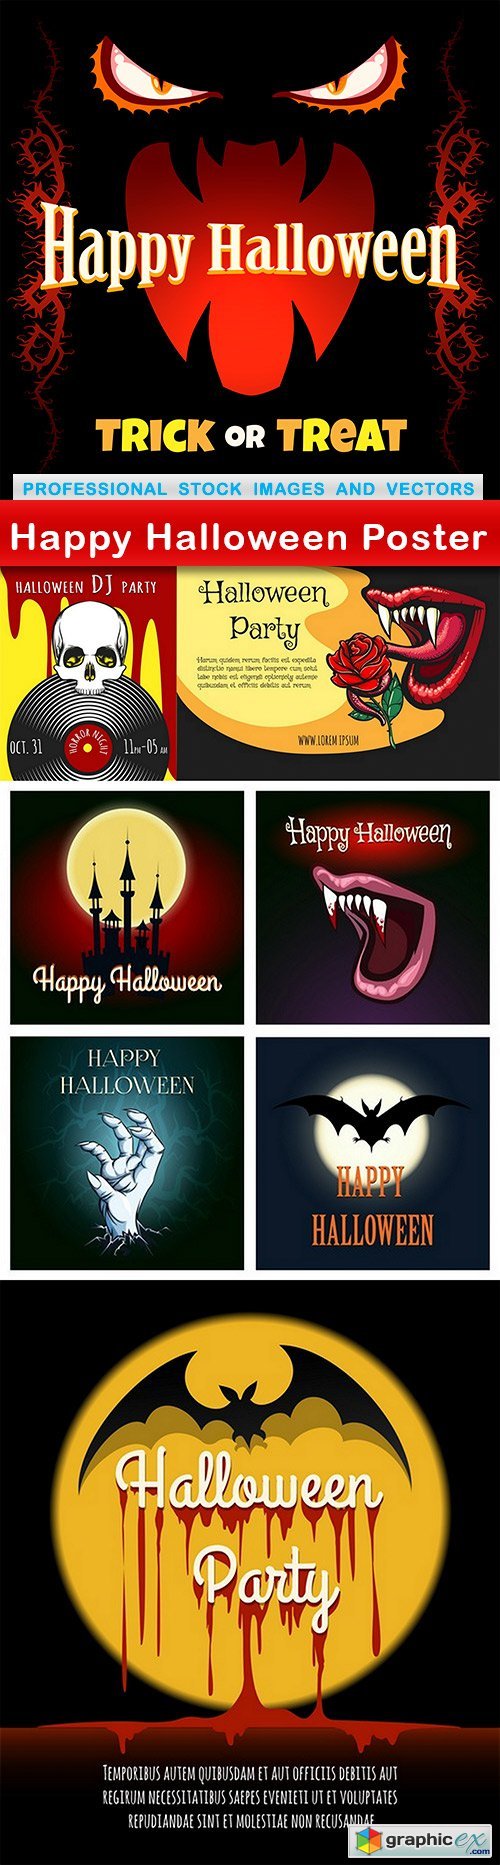 Happy Halloween Poster - 5 EPS